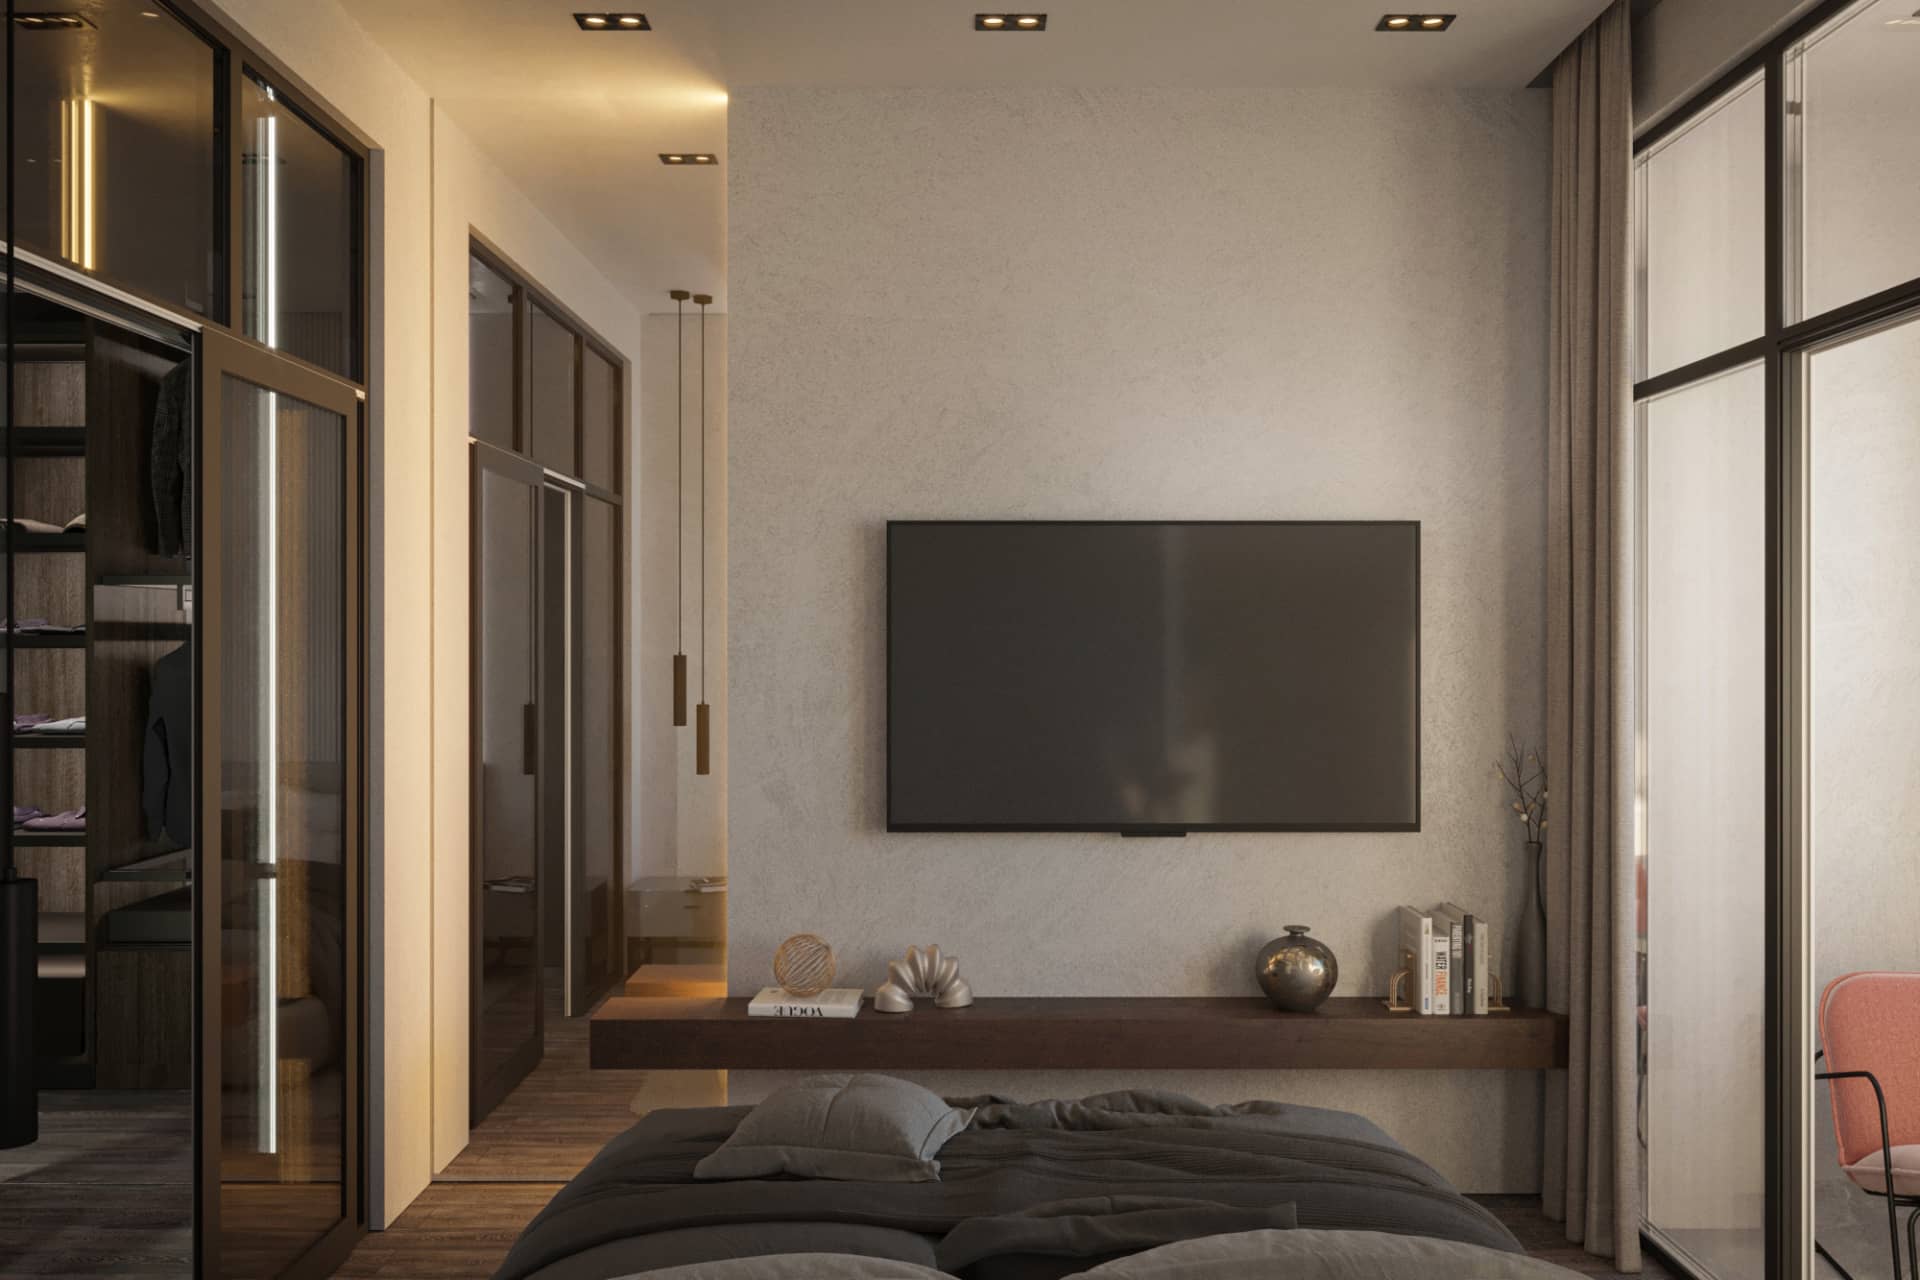 ТВ на стене перед кроватью